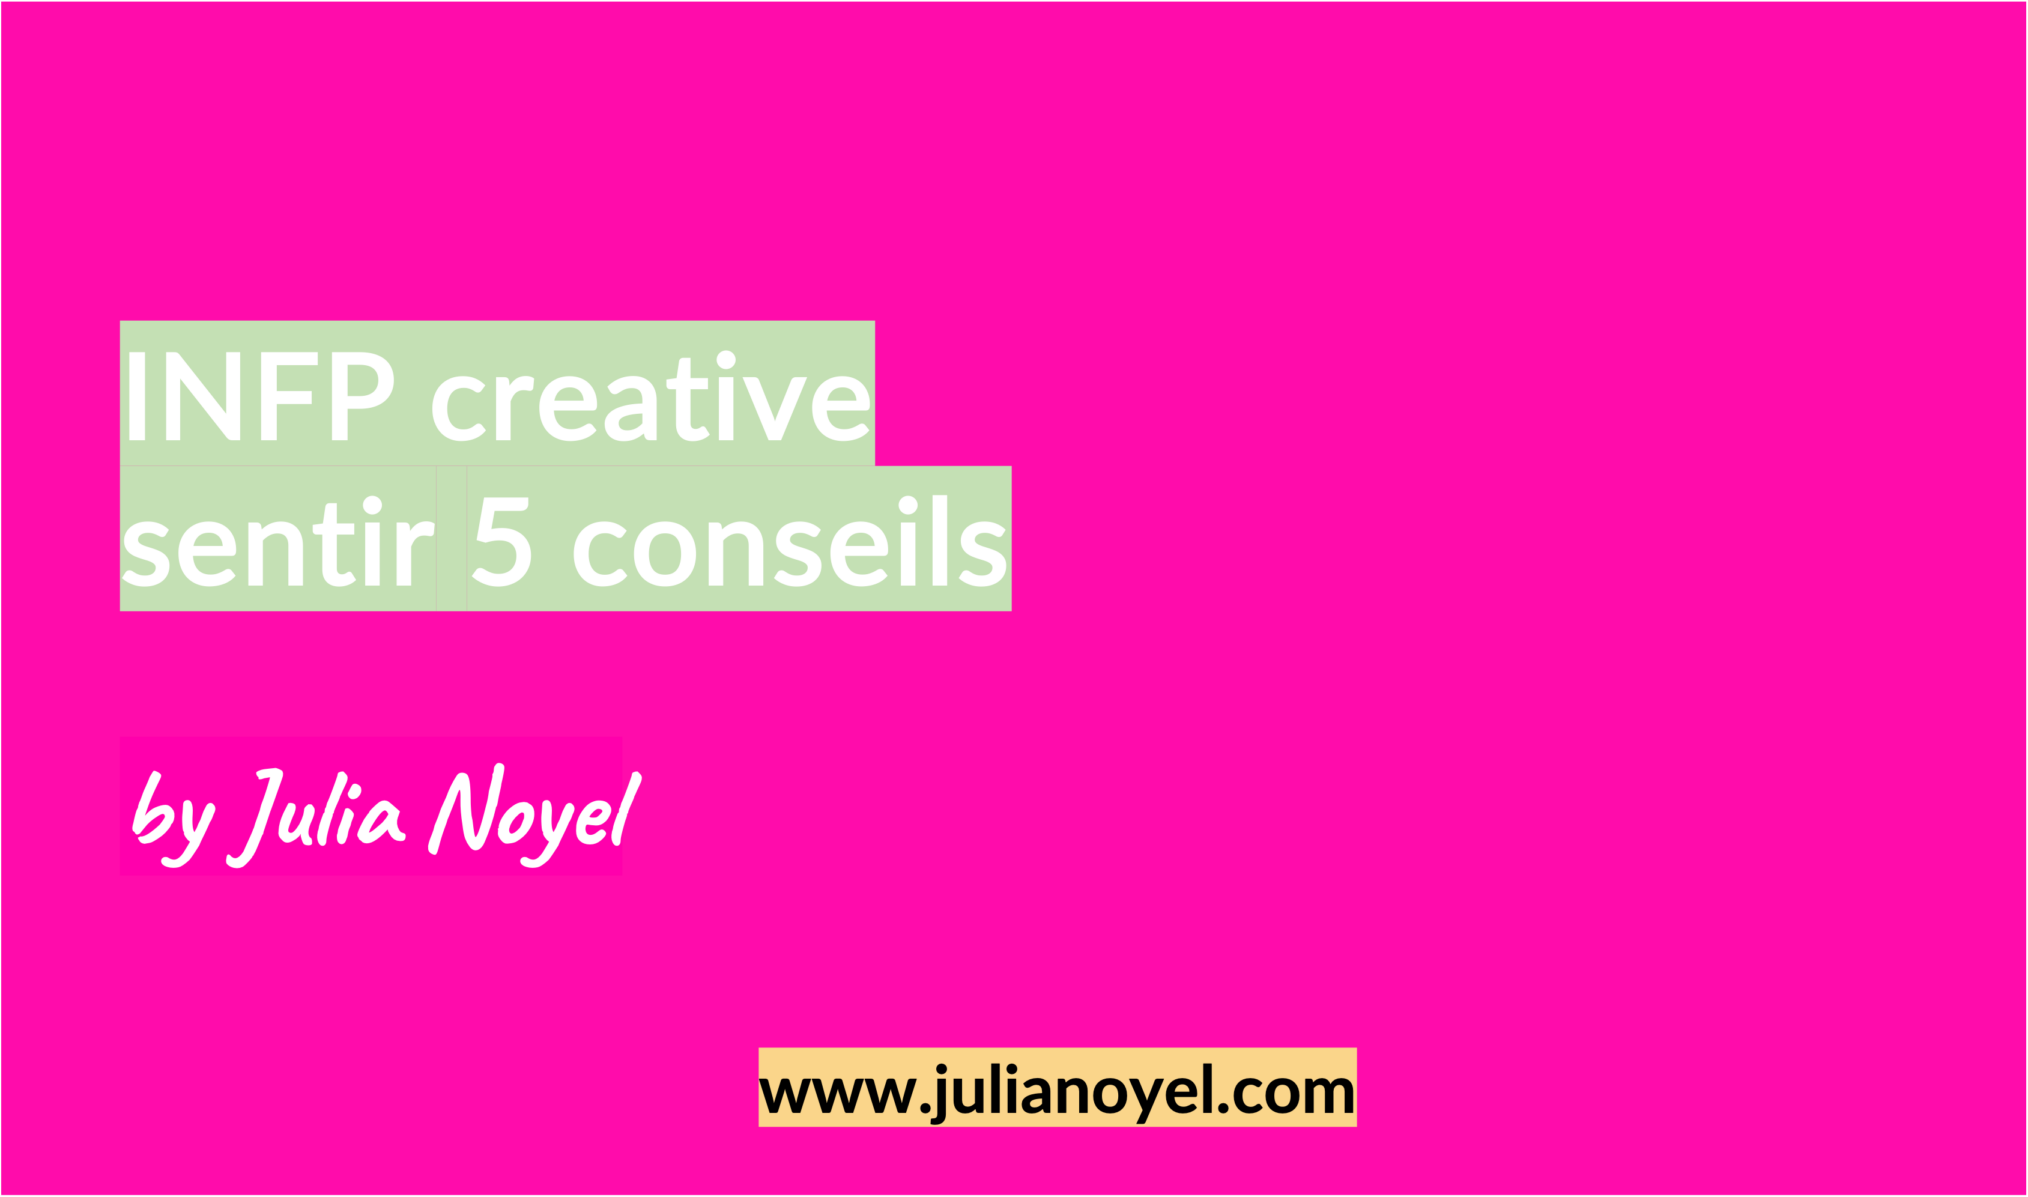 INFP creative sentir 5 conseils by Julia Noyel